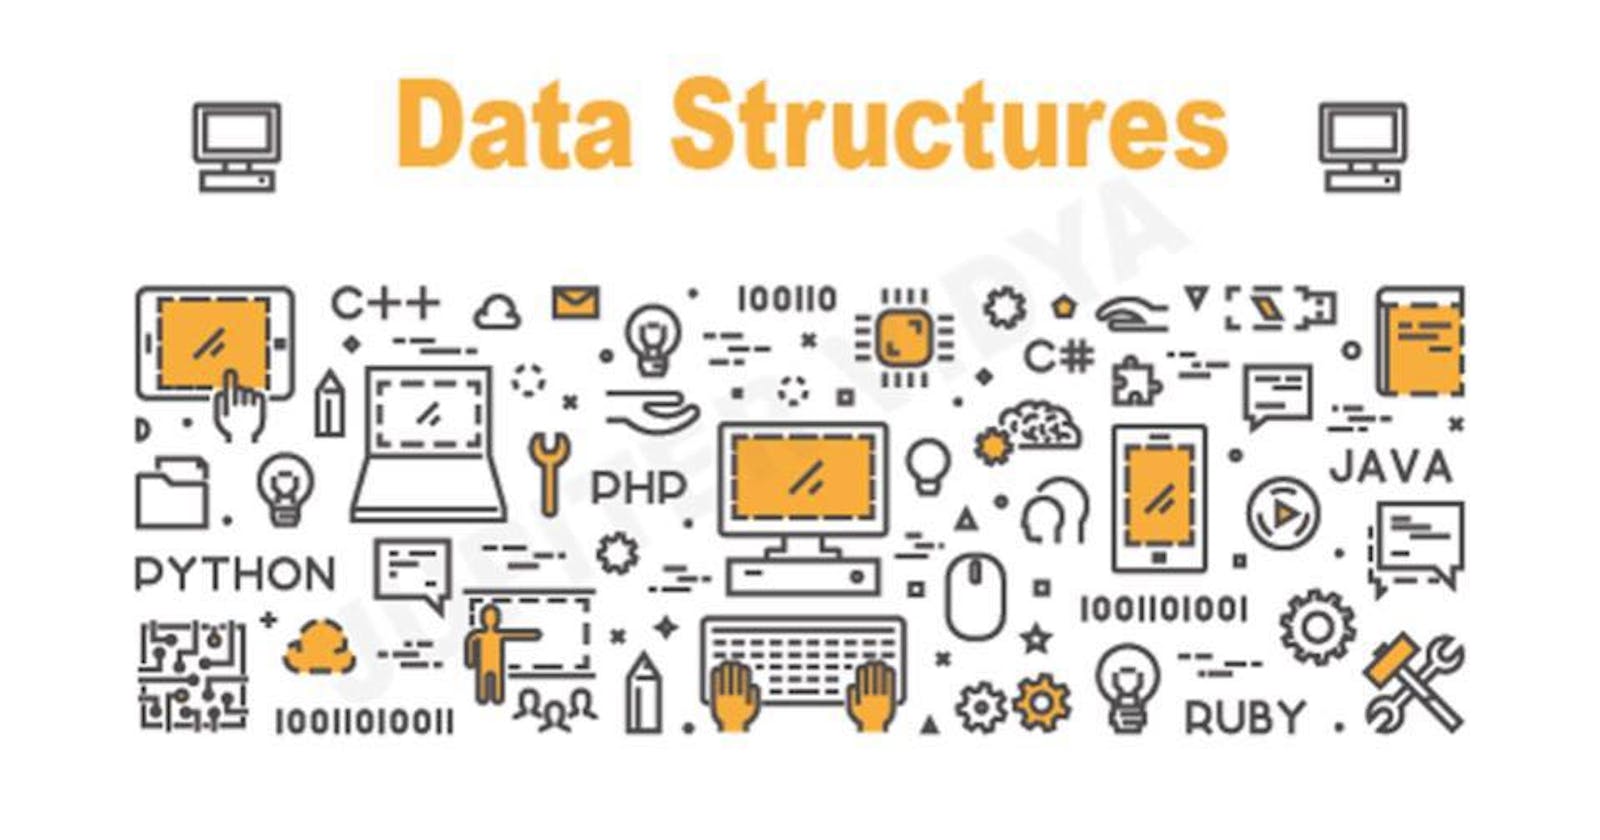 Data Structures Cheat Sheet